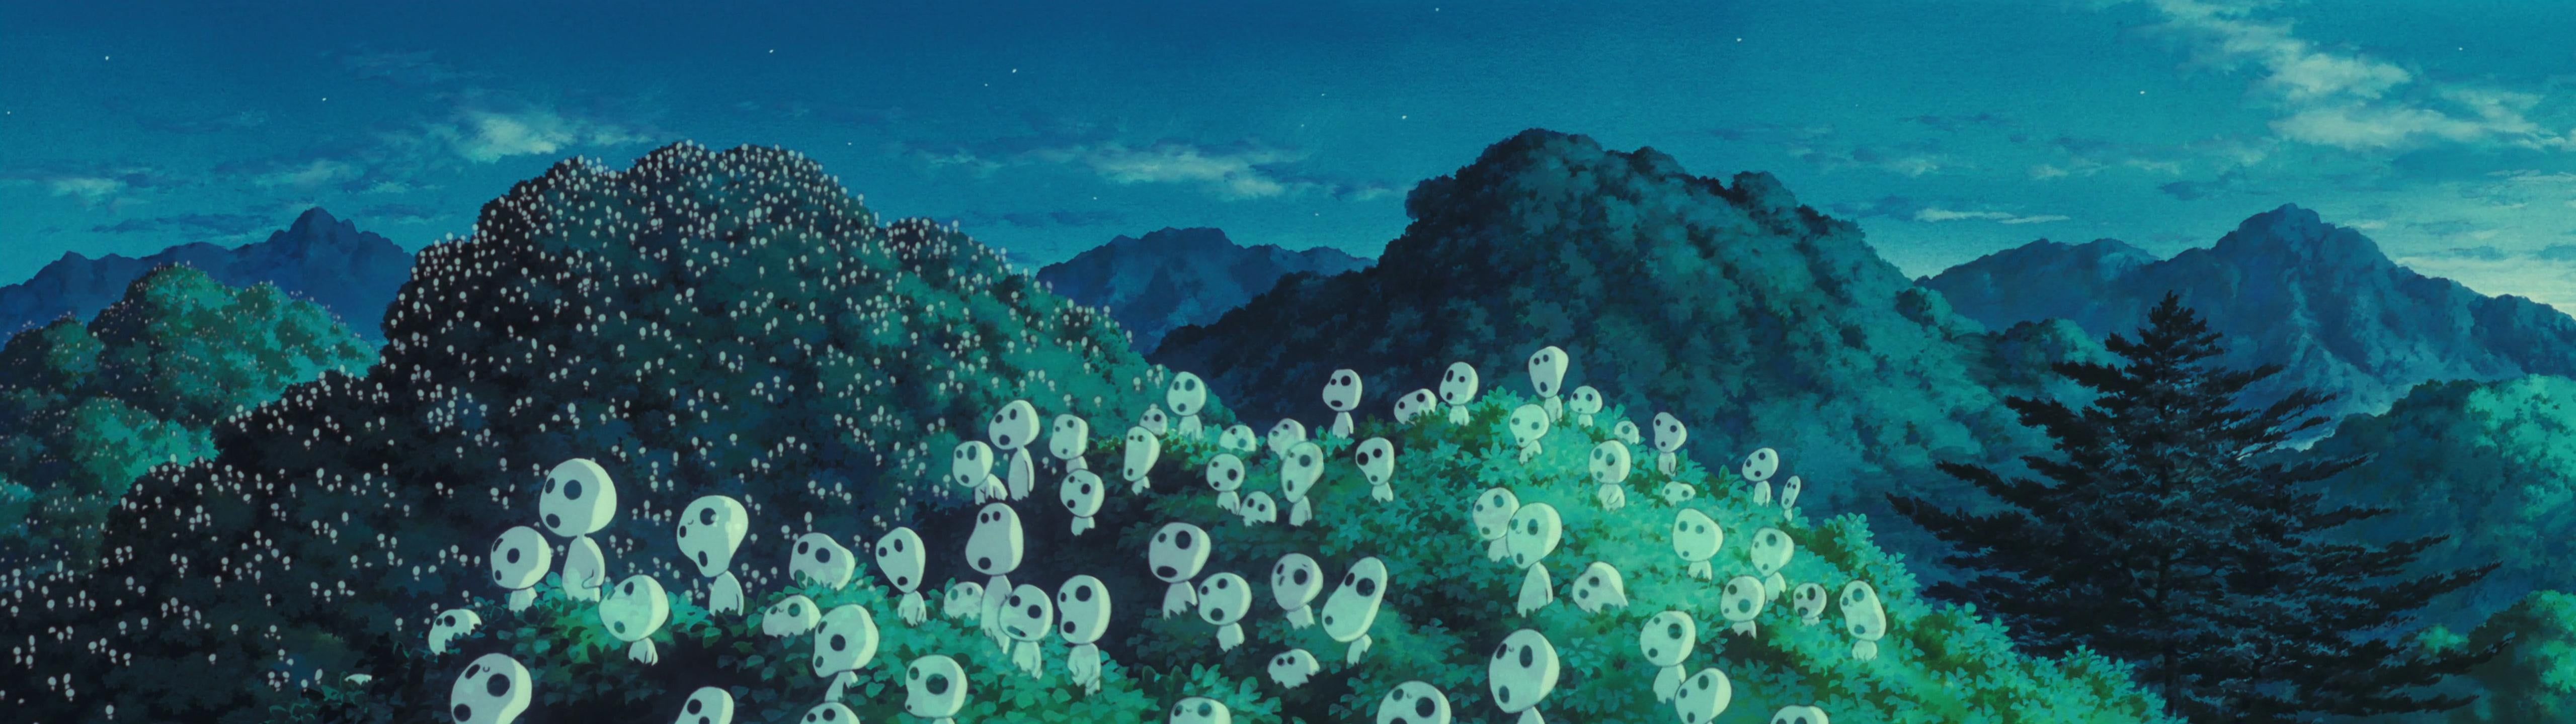 Super Ultra Wide Studio Ghibli wallpaper